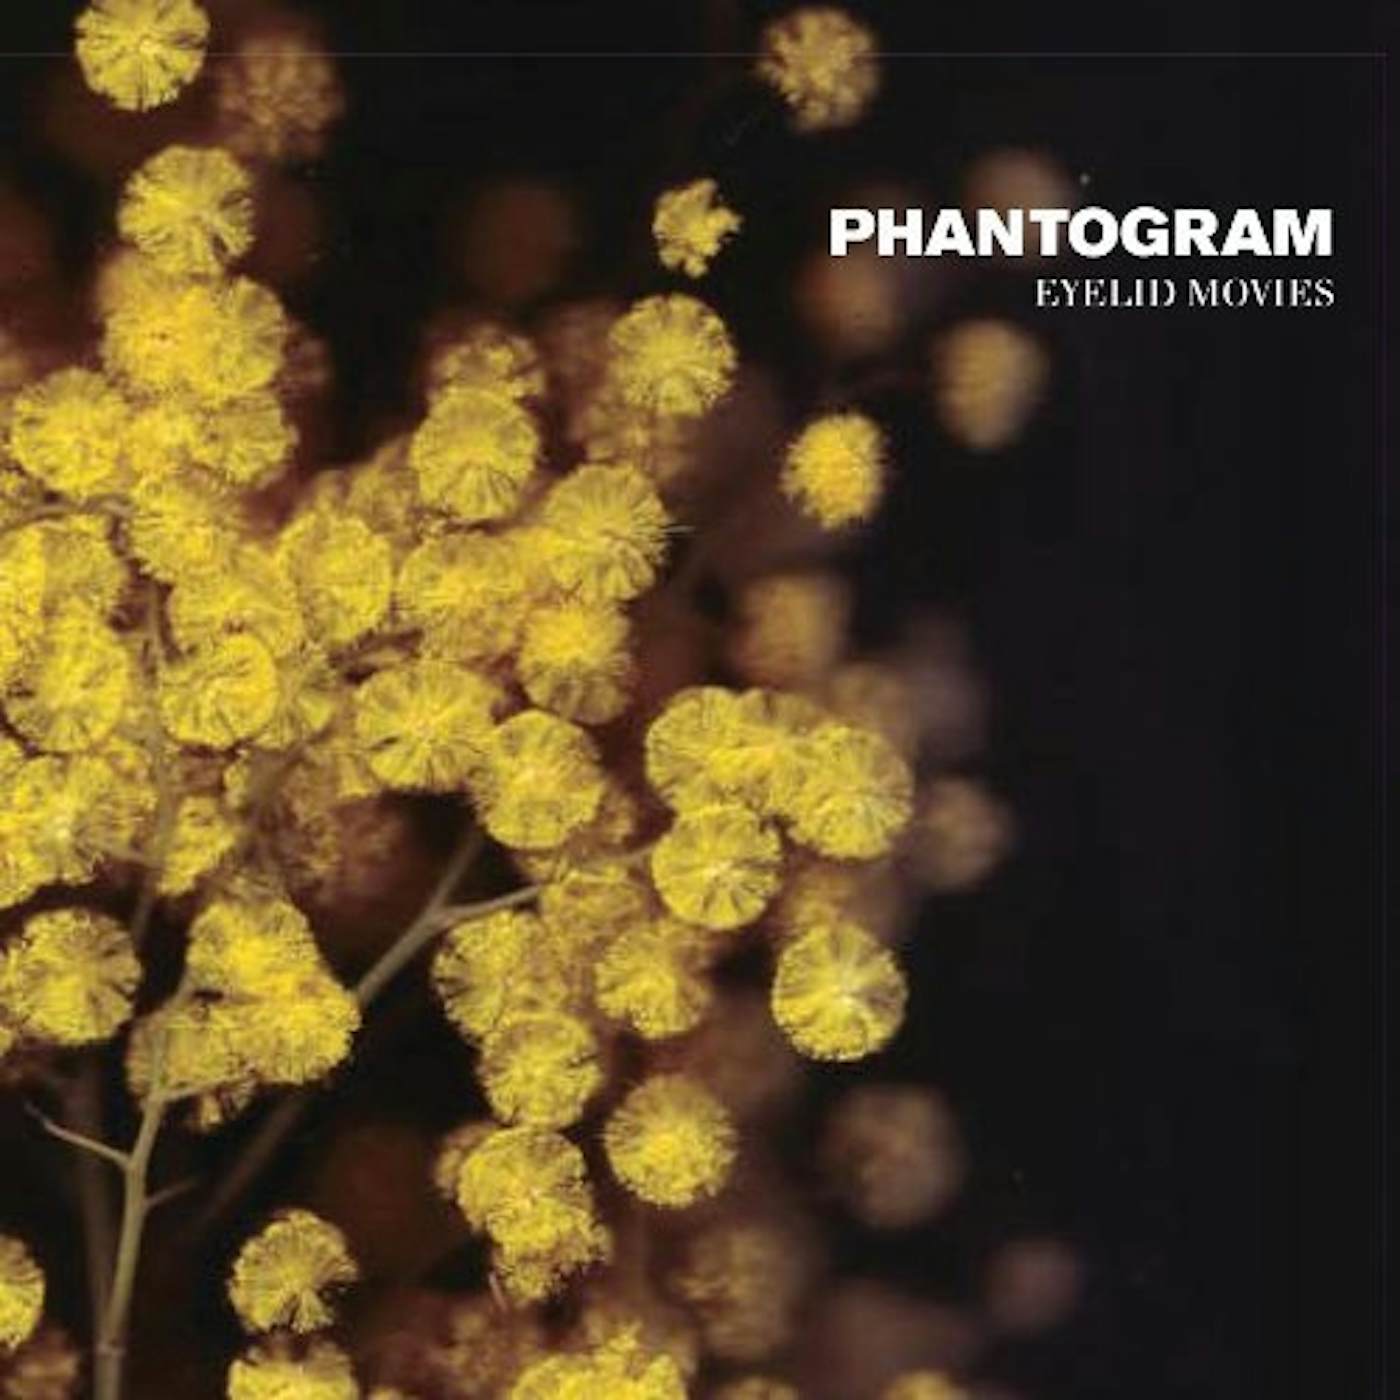 Phantogram Eyelid Movies Vinyl Record